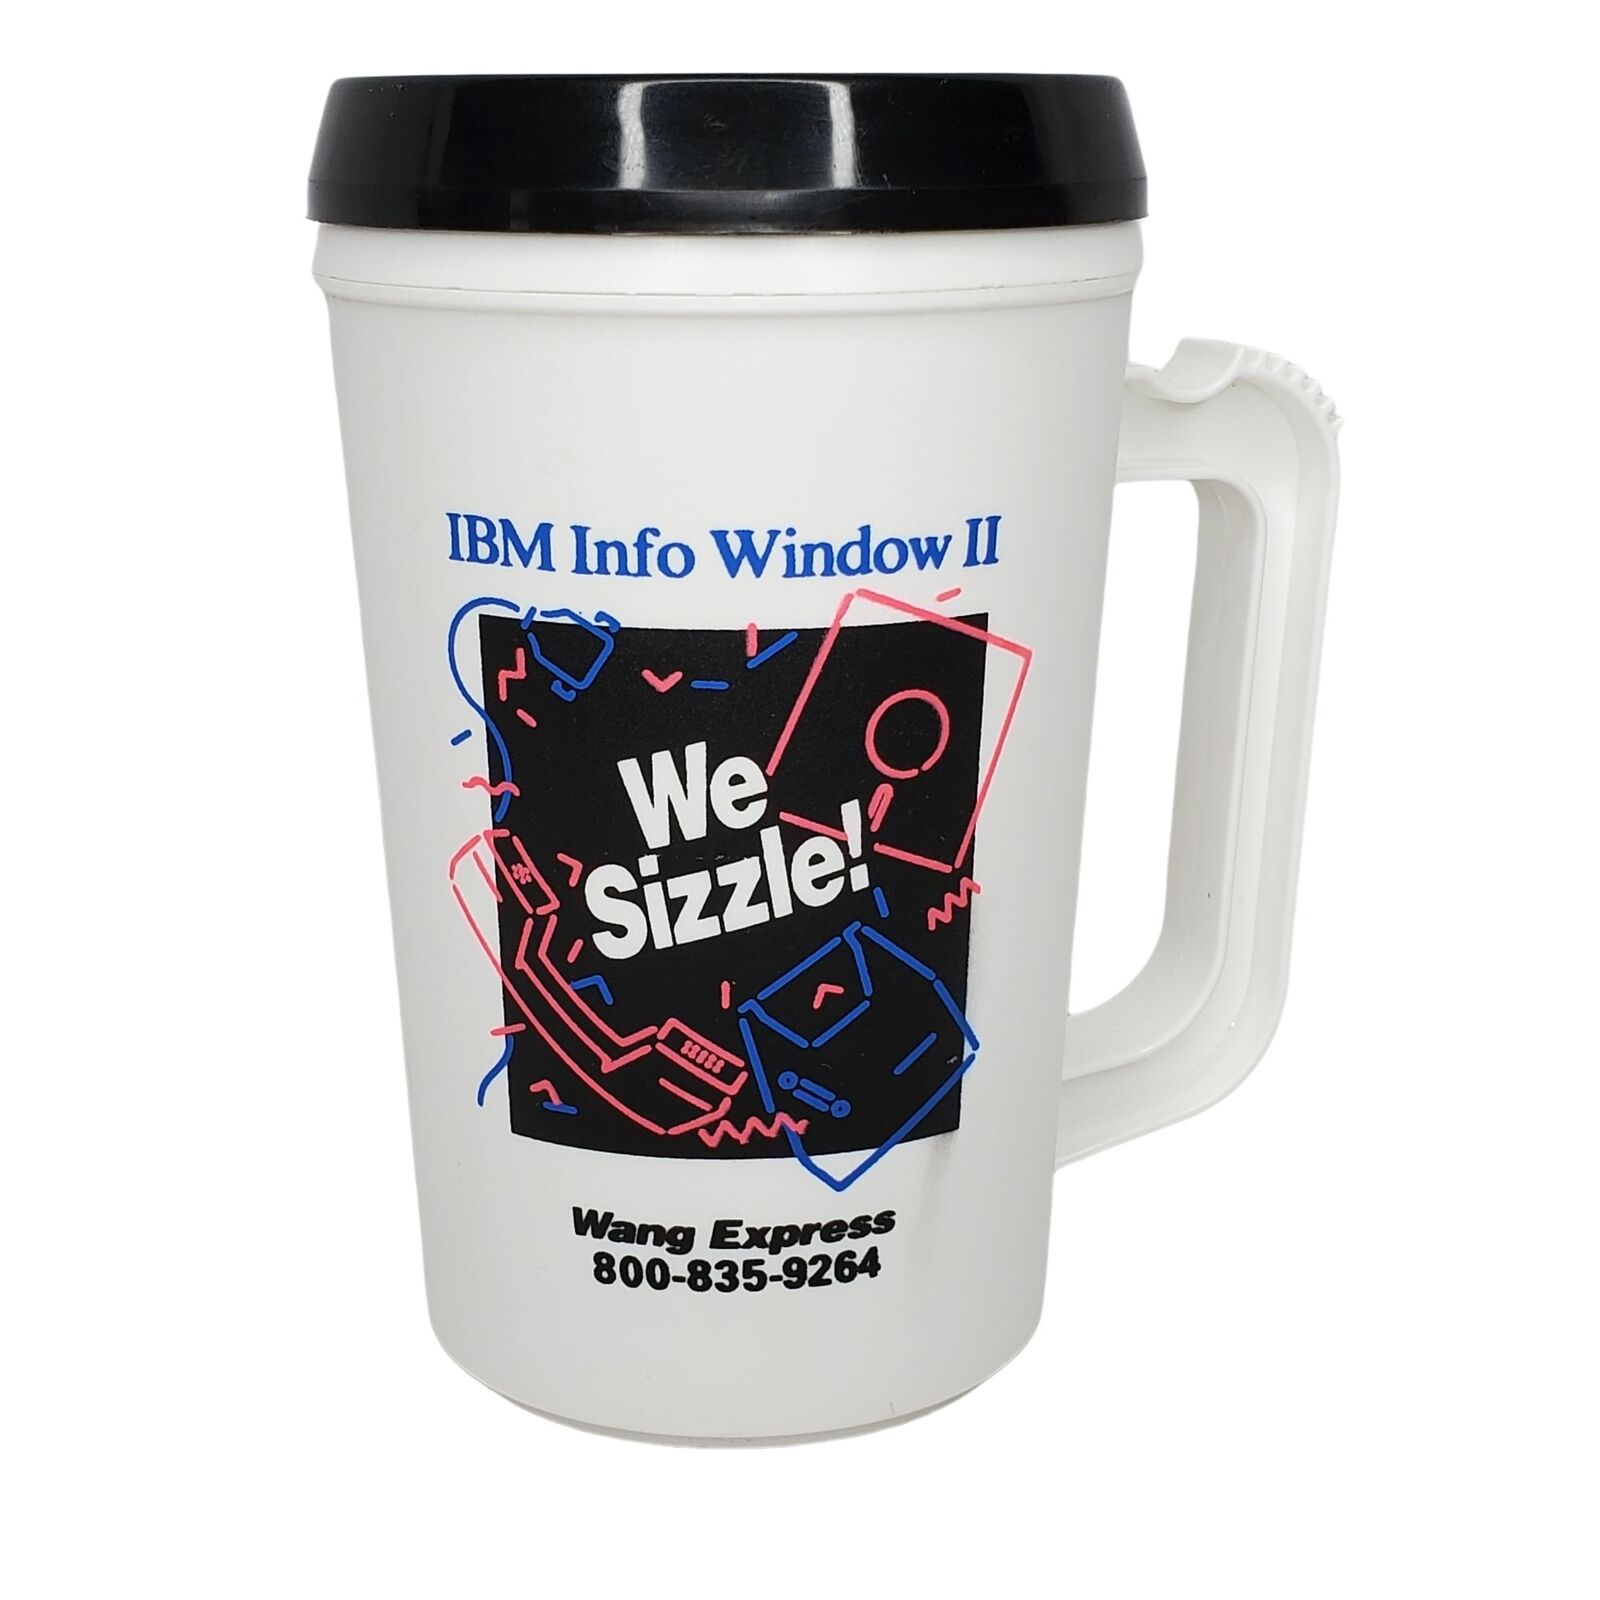 Vintage 1987 IBM Info Window II Travel Mug We Sizzle Advertising Wang Express